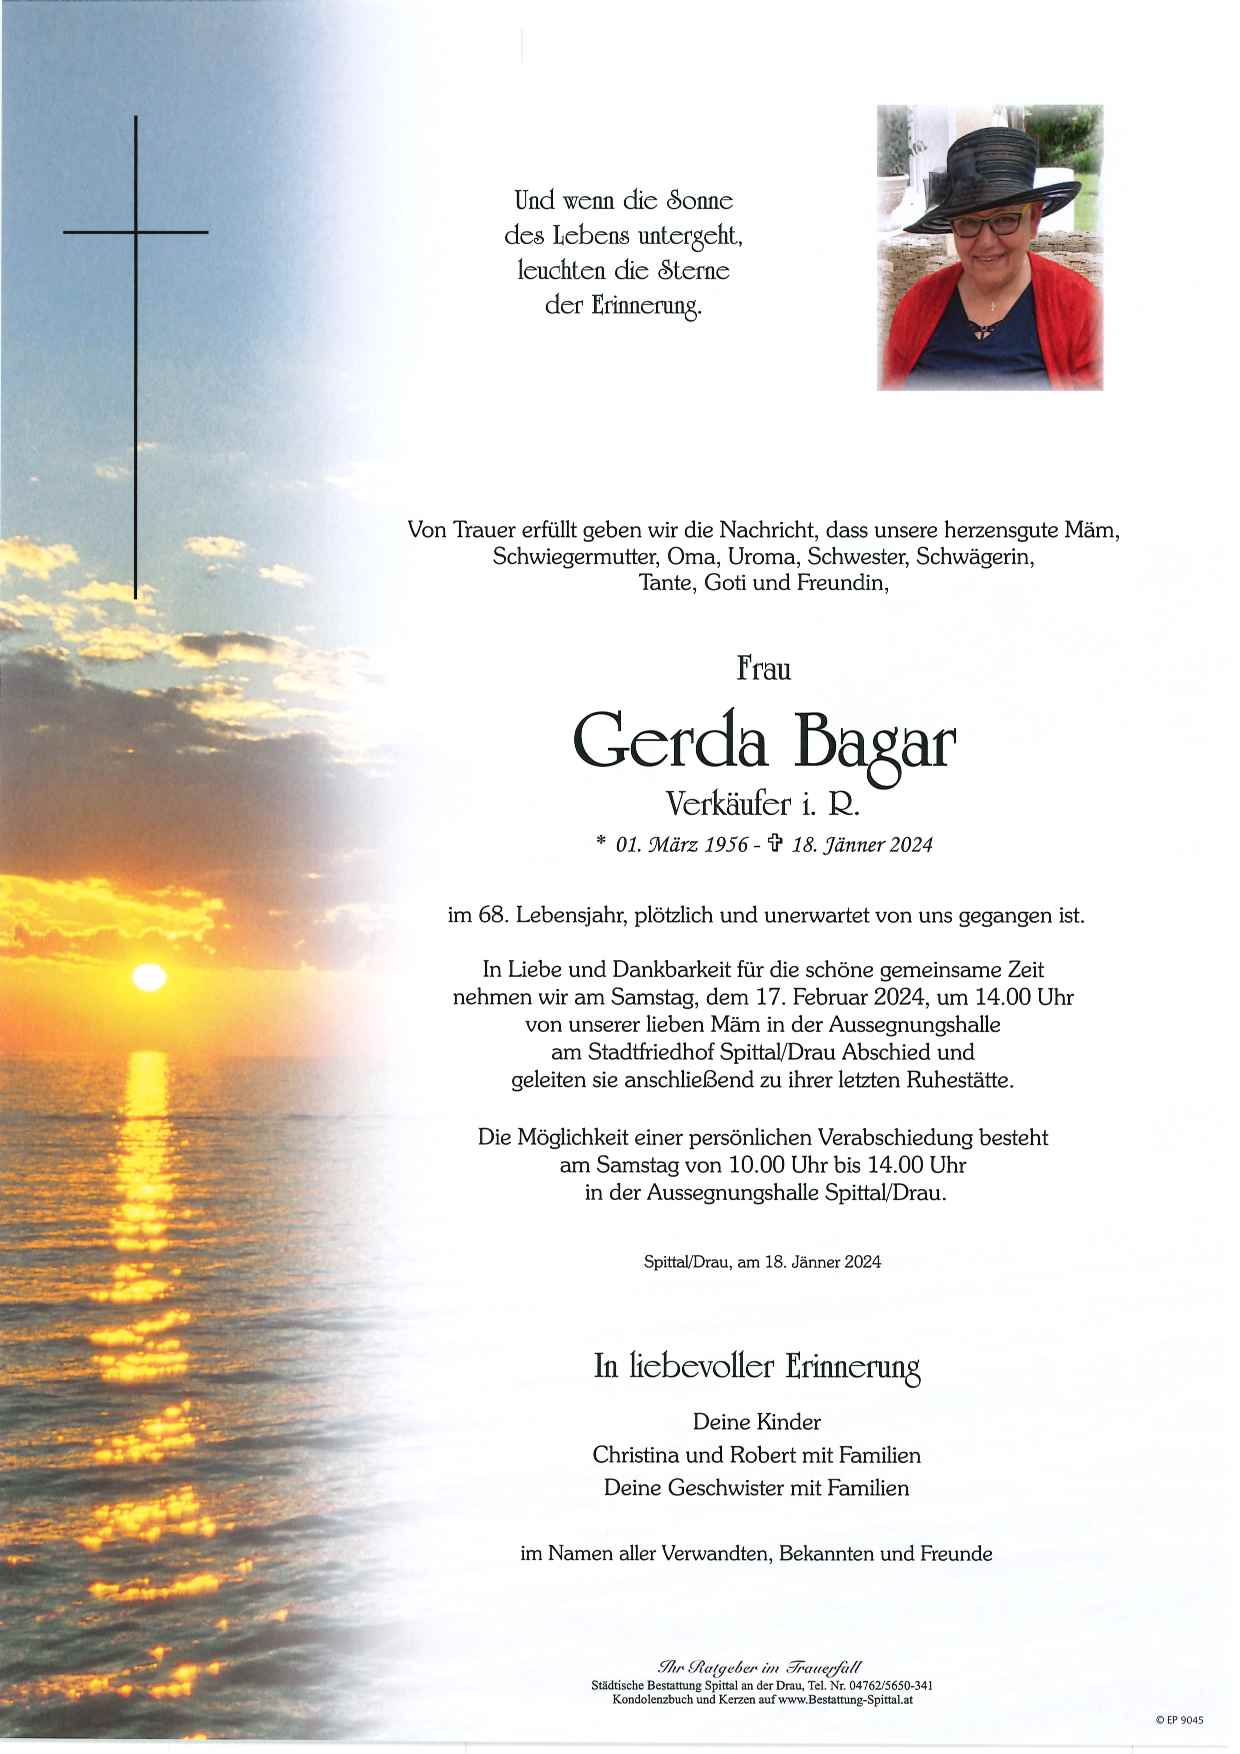 Gerda Bagar